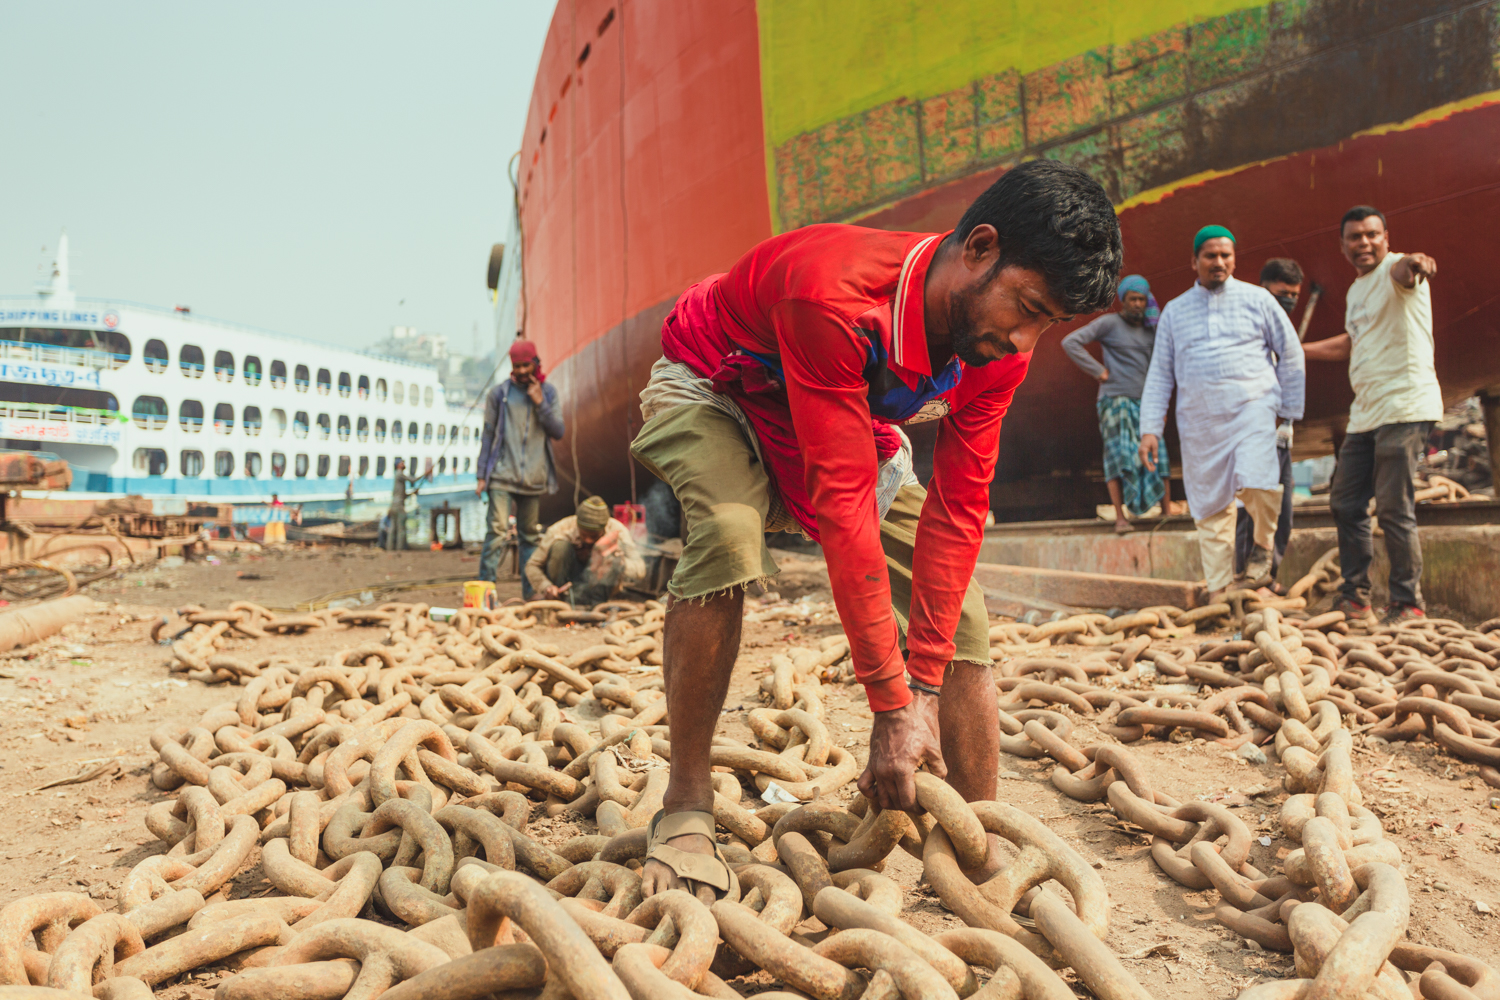 Work struggling to move chains at Dhaka, Bangladesh Shipyard.